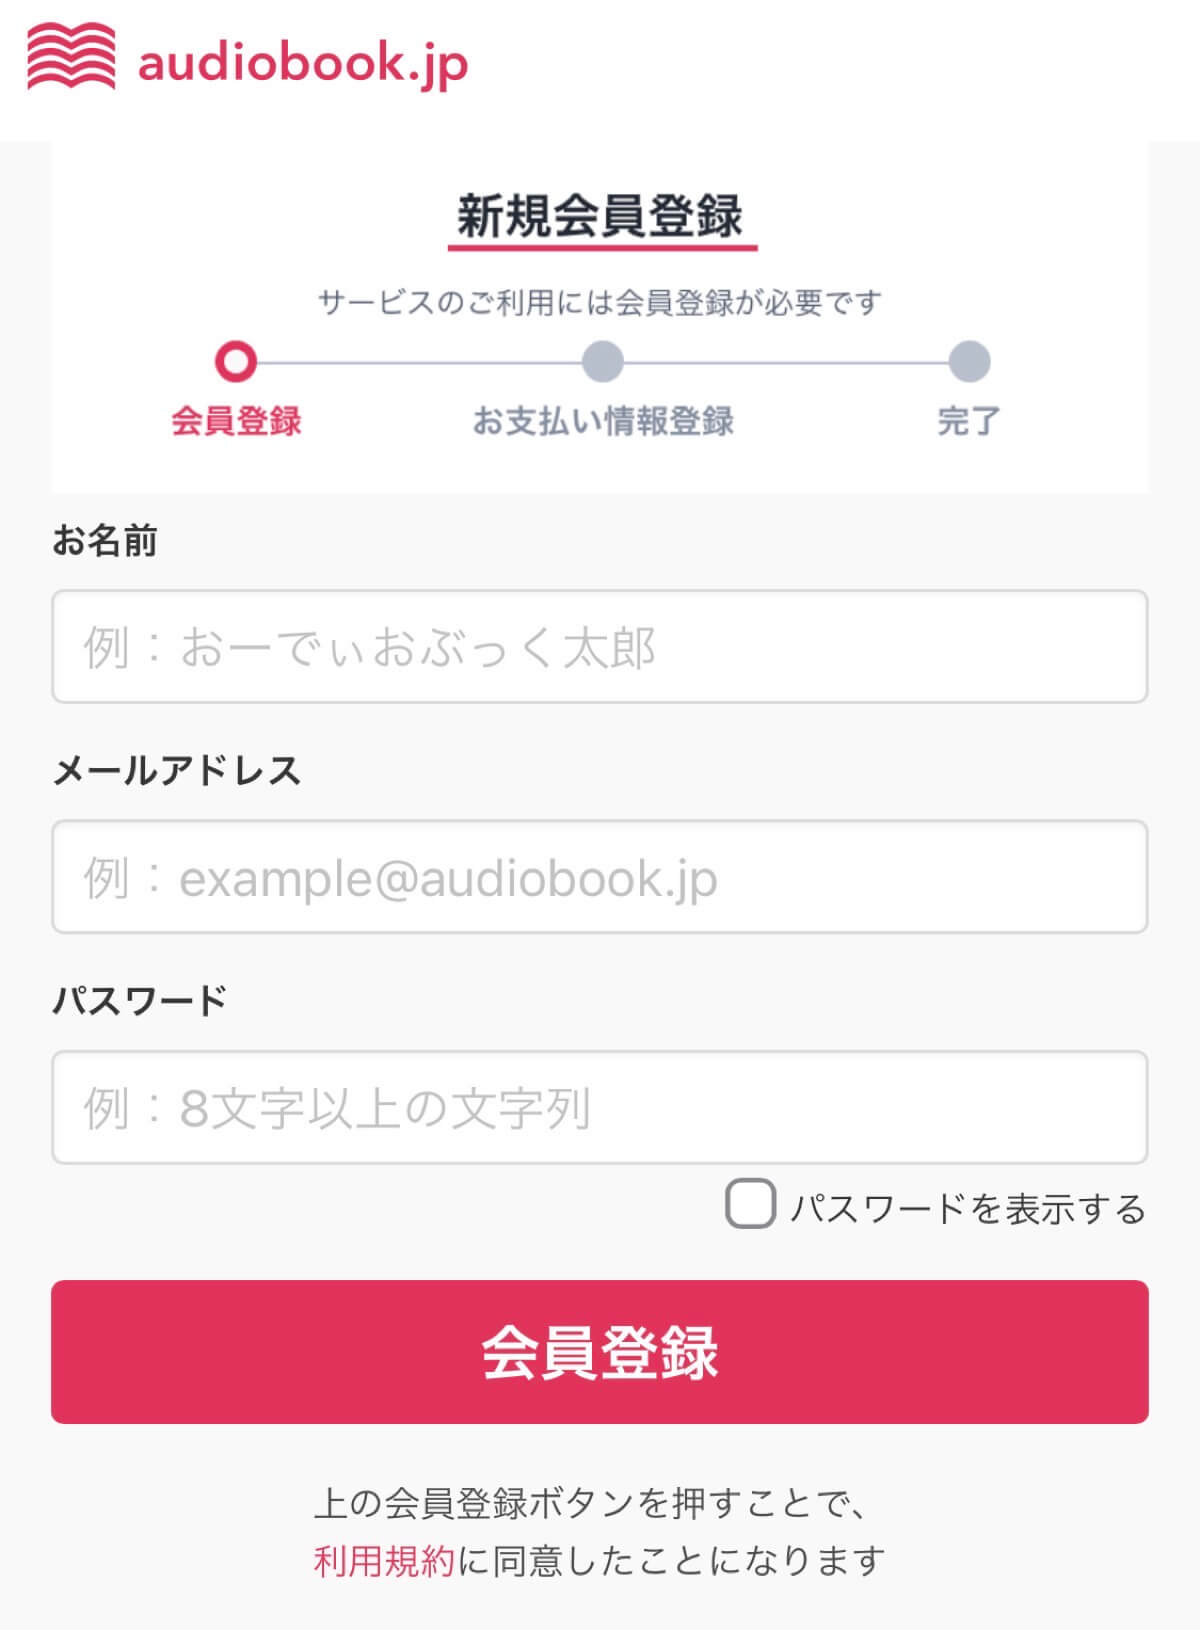 audiobook.jpの登録方法2